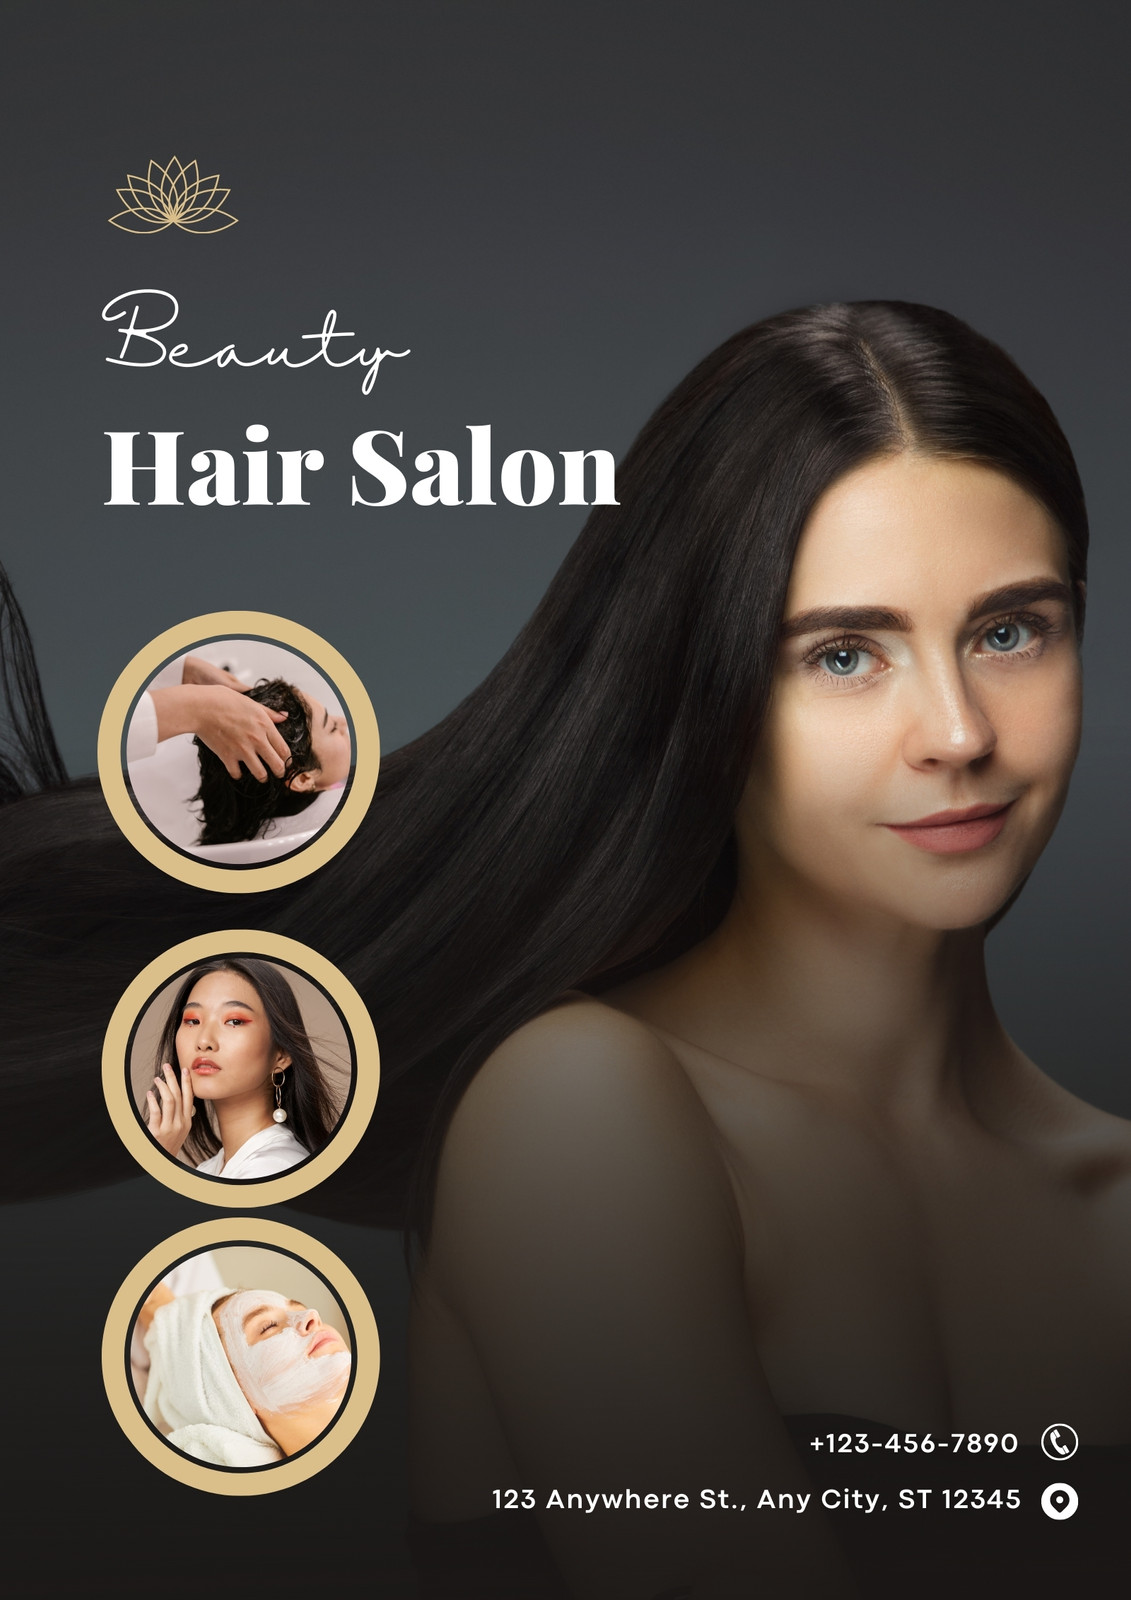 Customize 101+ Hair Salon Flyers Templates Online - Canva